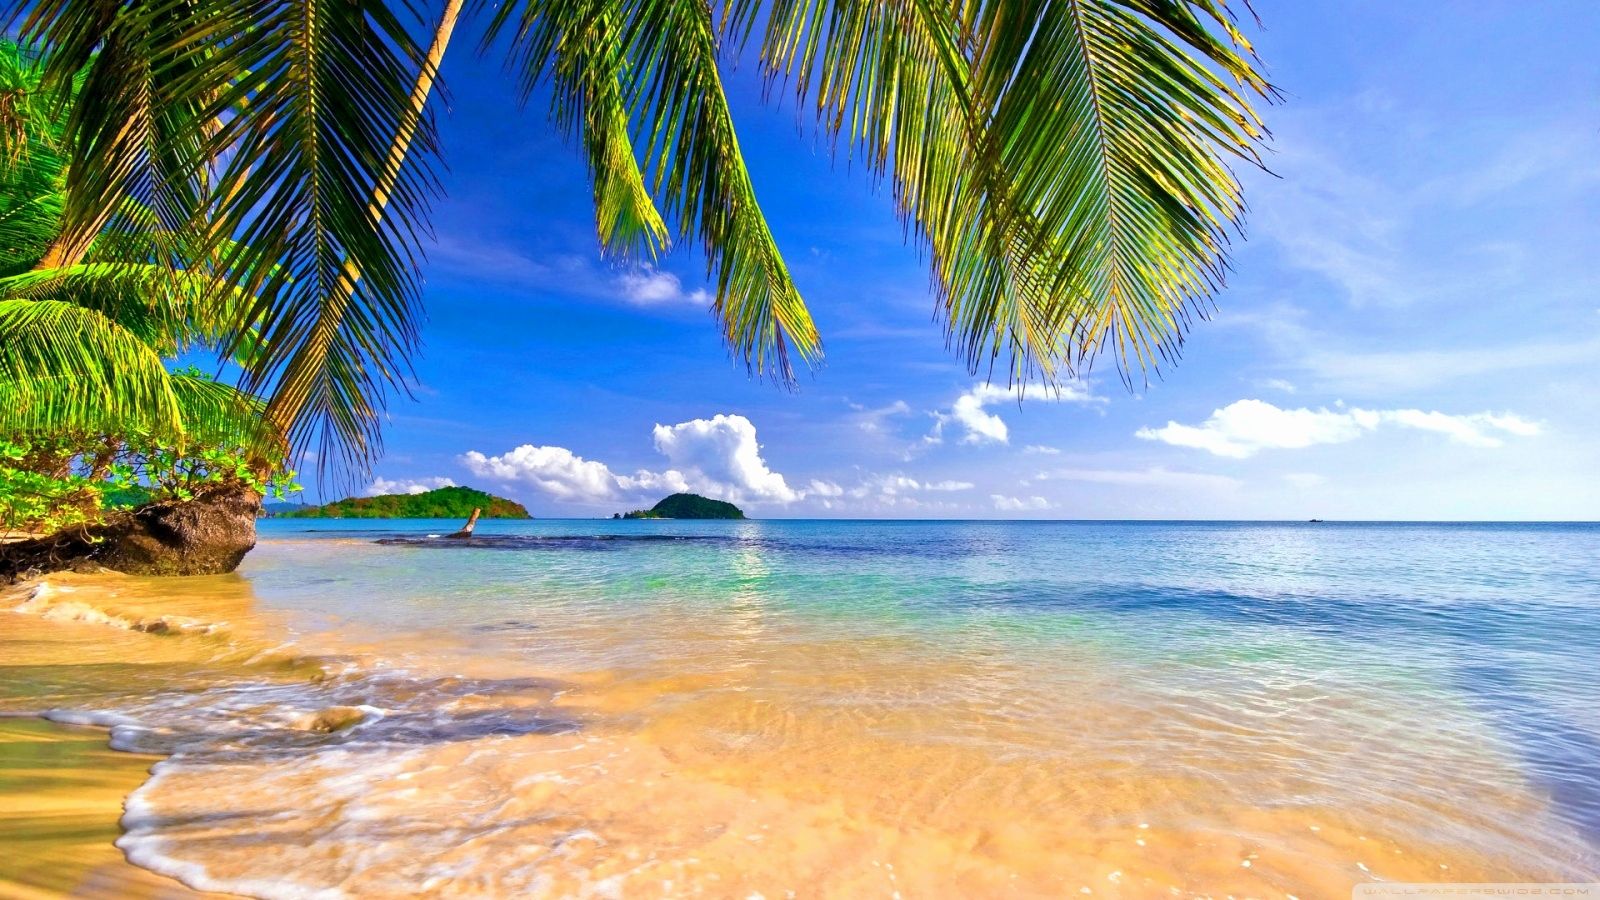 Tropical Sea Beach 4K wallpaper download